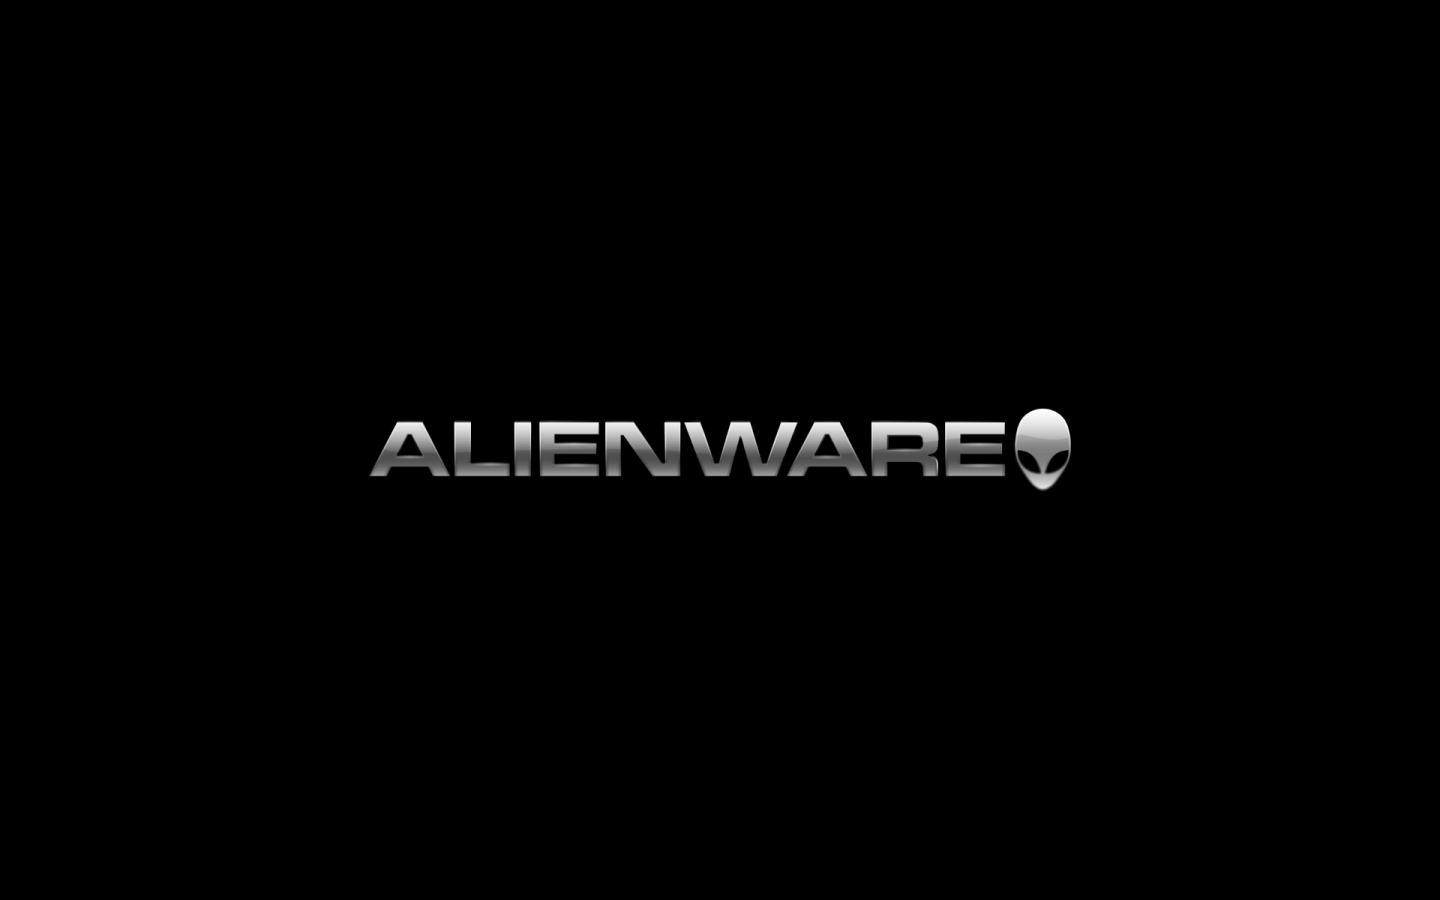 Black Alienware for 1440 x 900 widescreen resolution